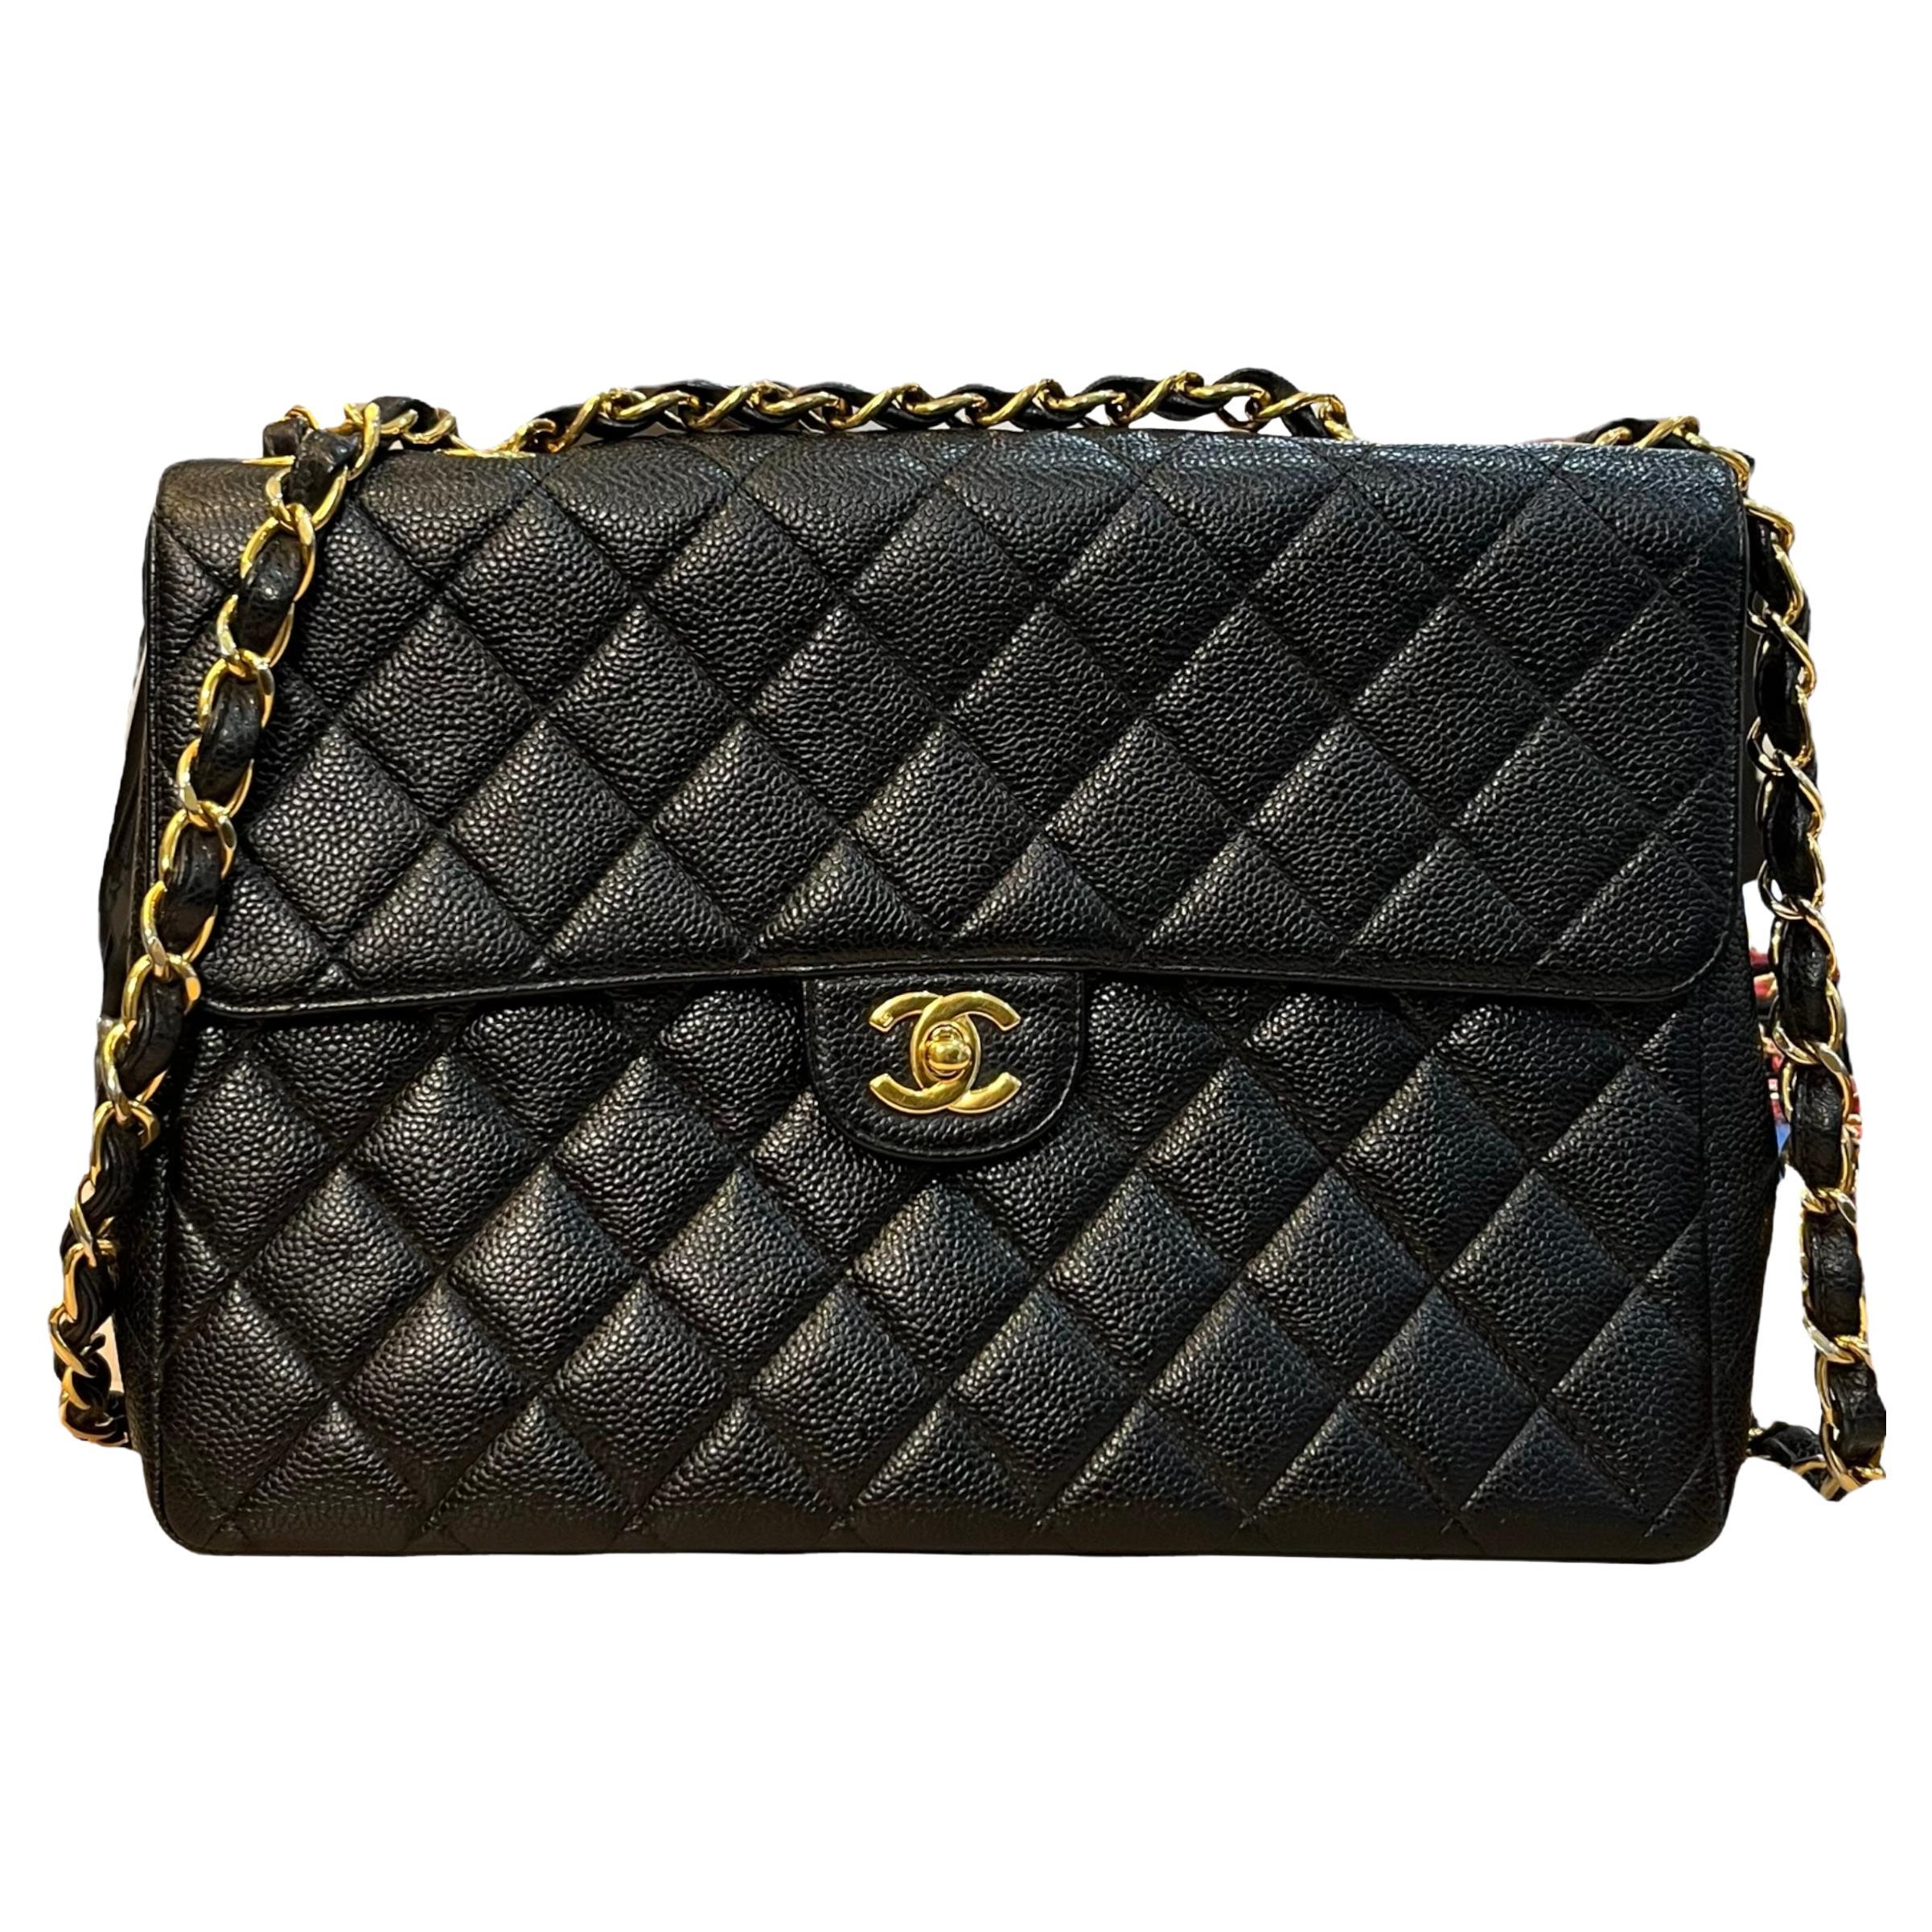 CHANEL Caviar Leather Classic Single Flap Jumbo Bag